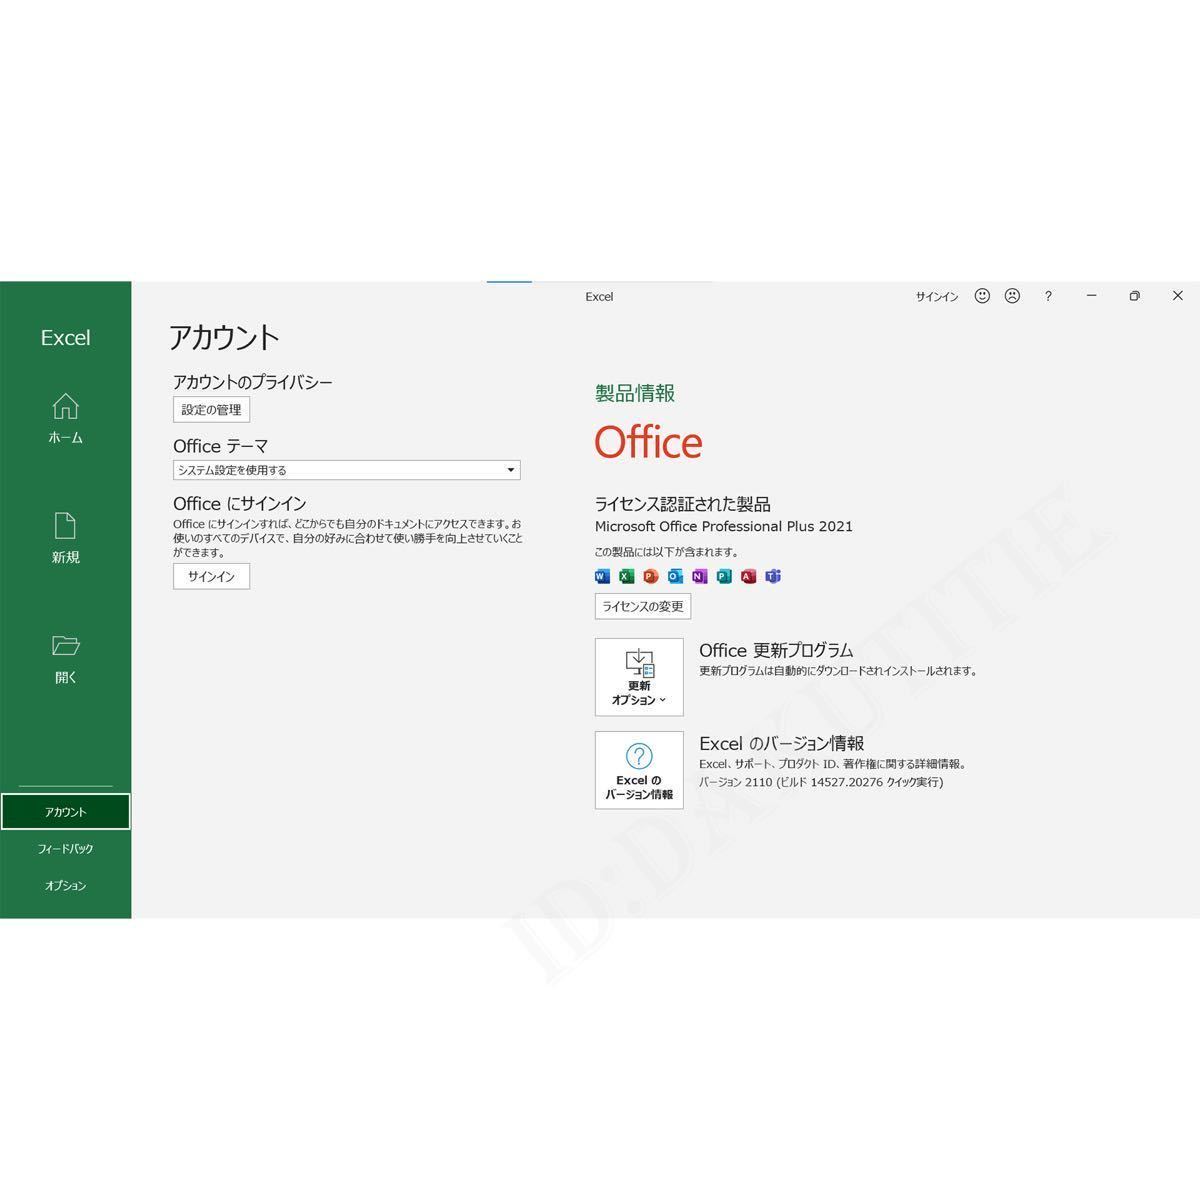 【Office2021 認証保証 】Microsoft Office 2021 Professional Plus オフィス2021 プロダクトキー 正規 Word Excel 手順書ありtの画像6